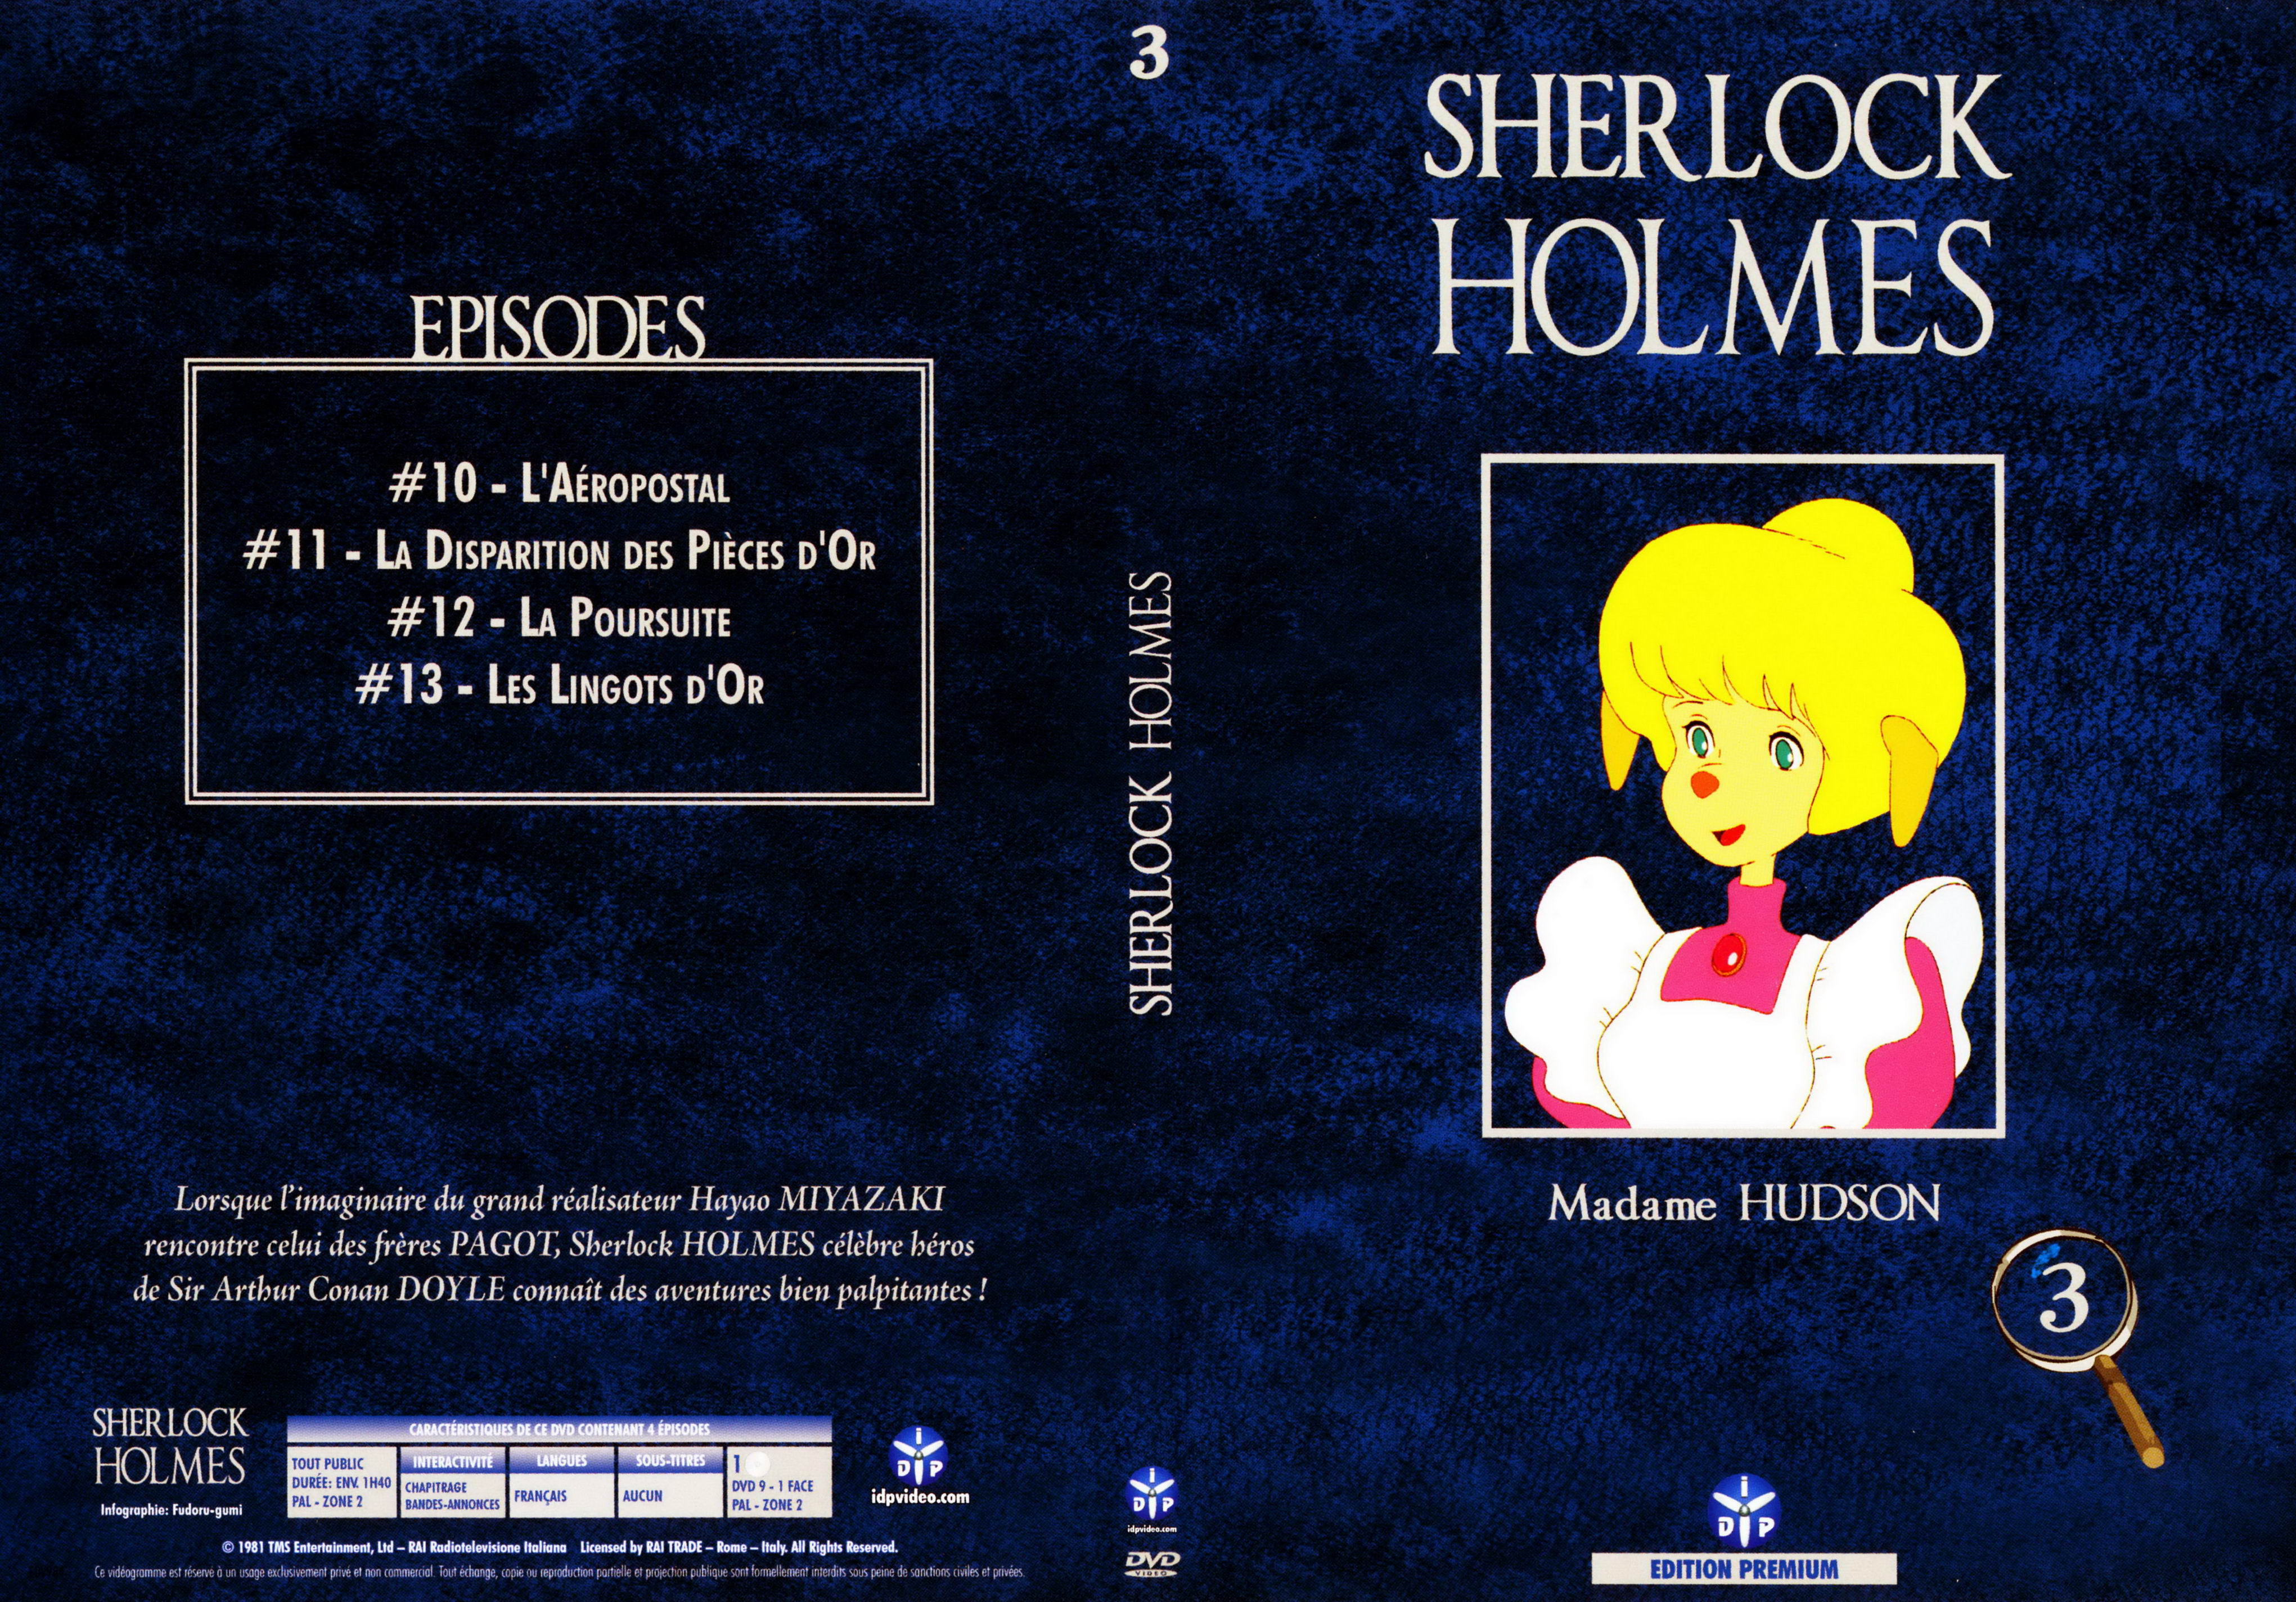 Jaquette DVD Sherlock Holmes vol 3 v2